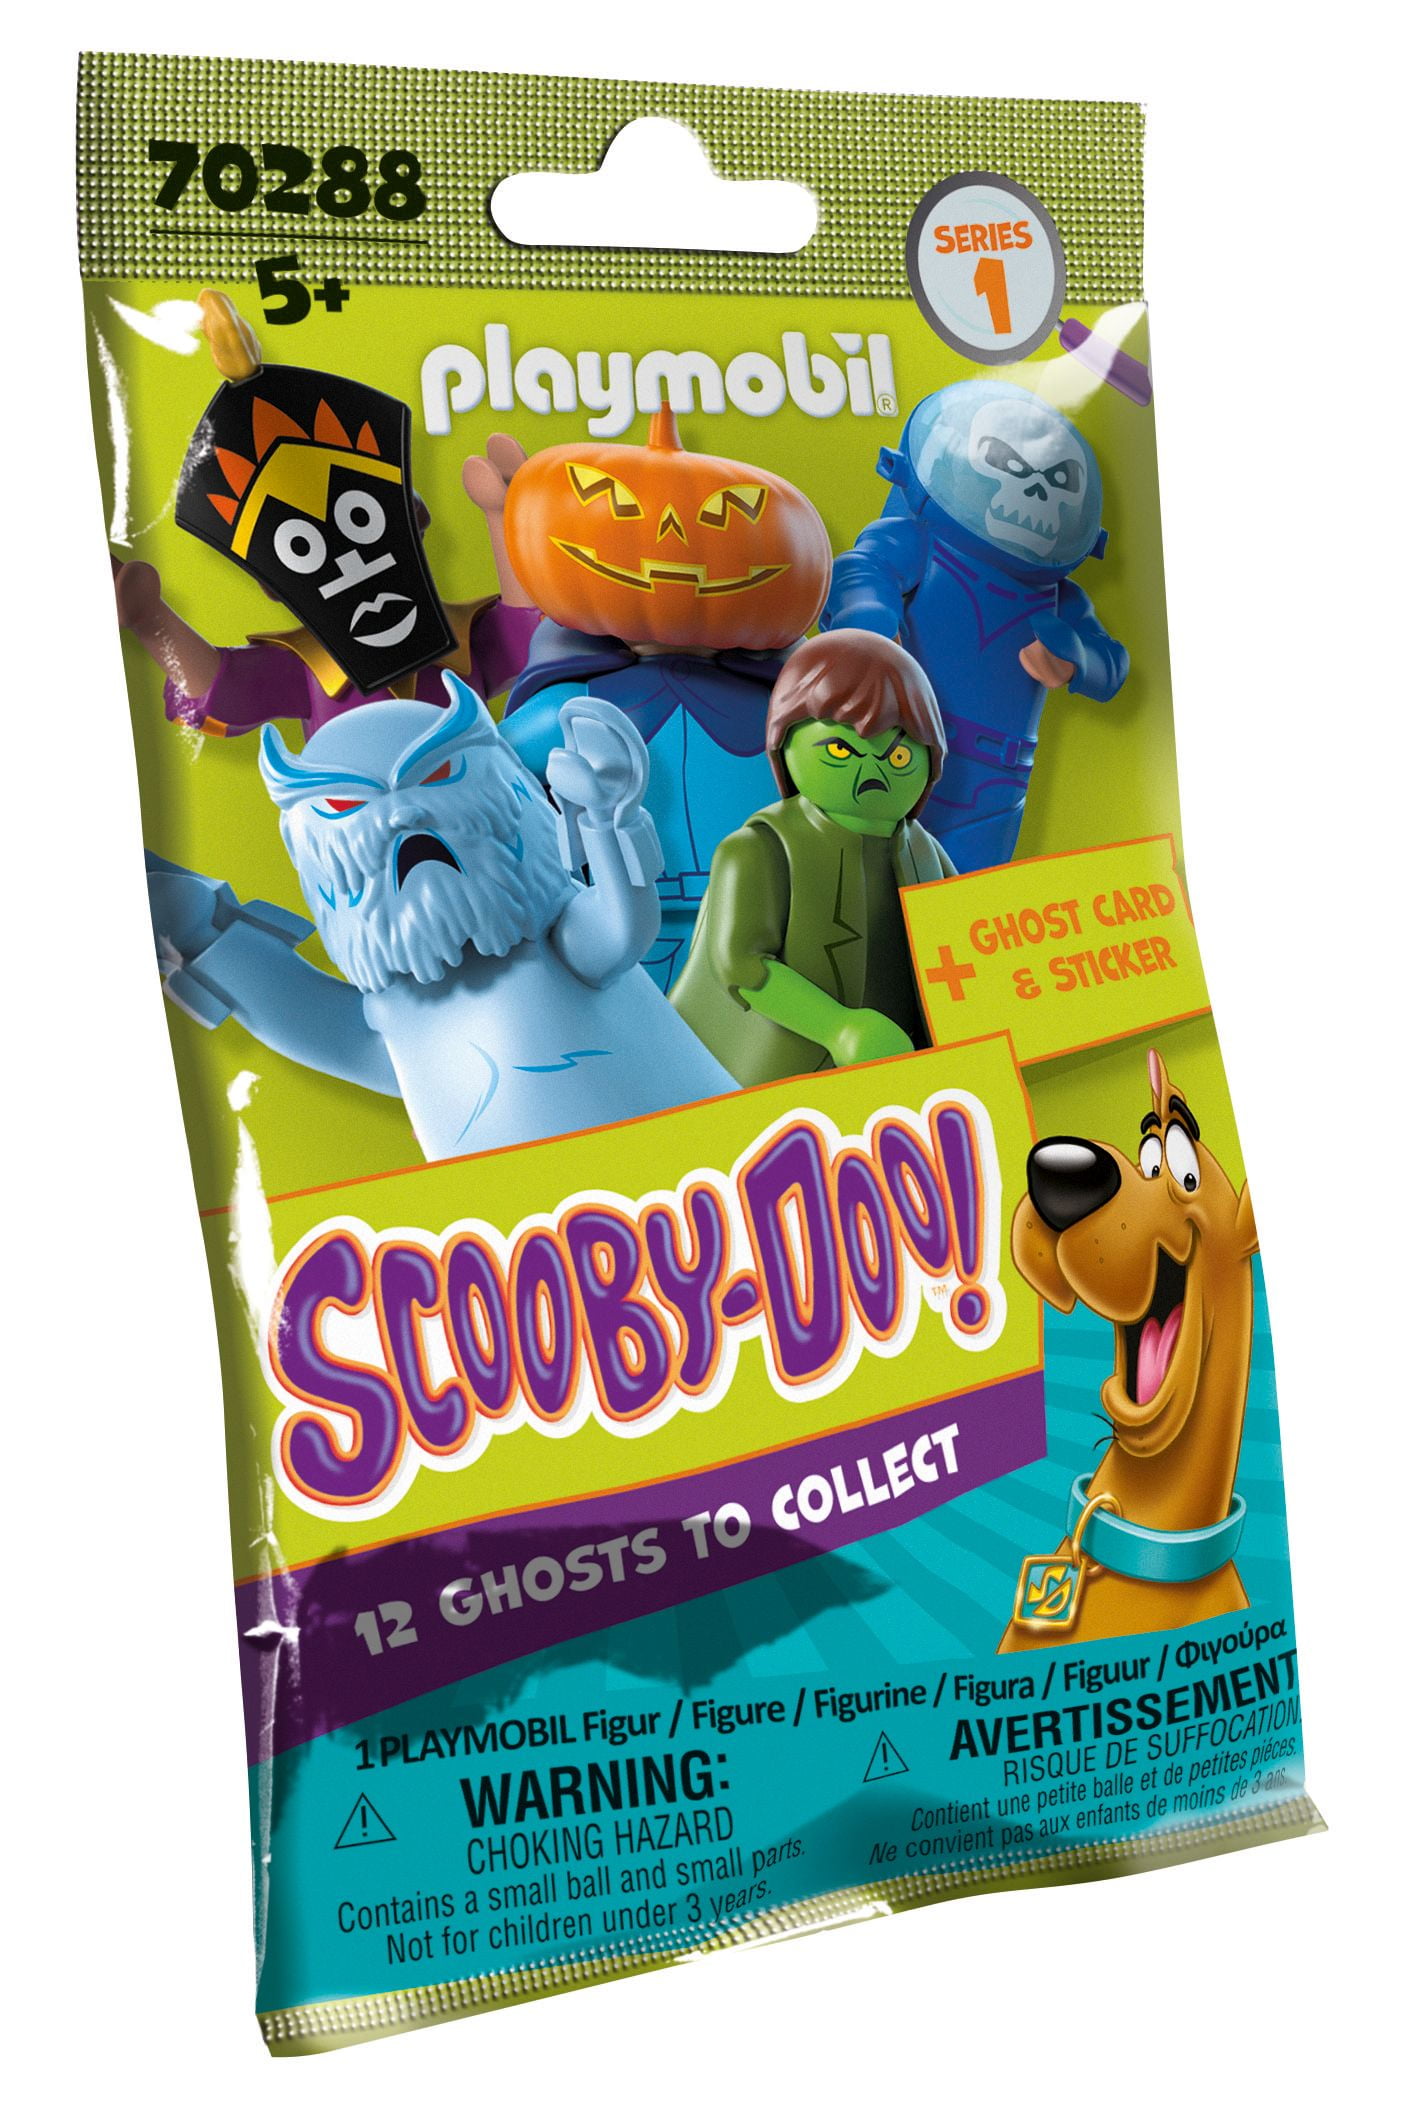 Playmobil Scooby Doo blind bag Ghost Series The Caretaker 